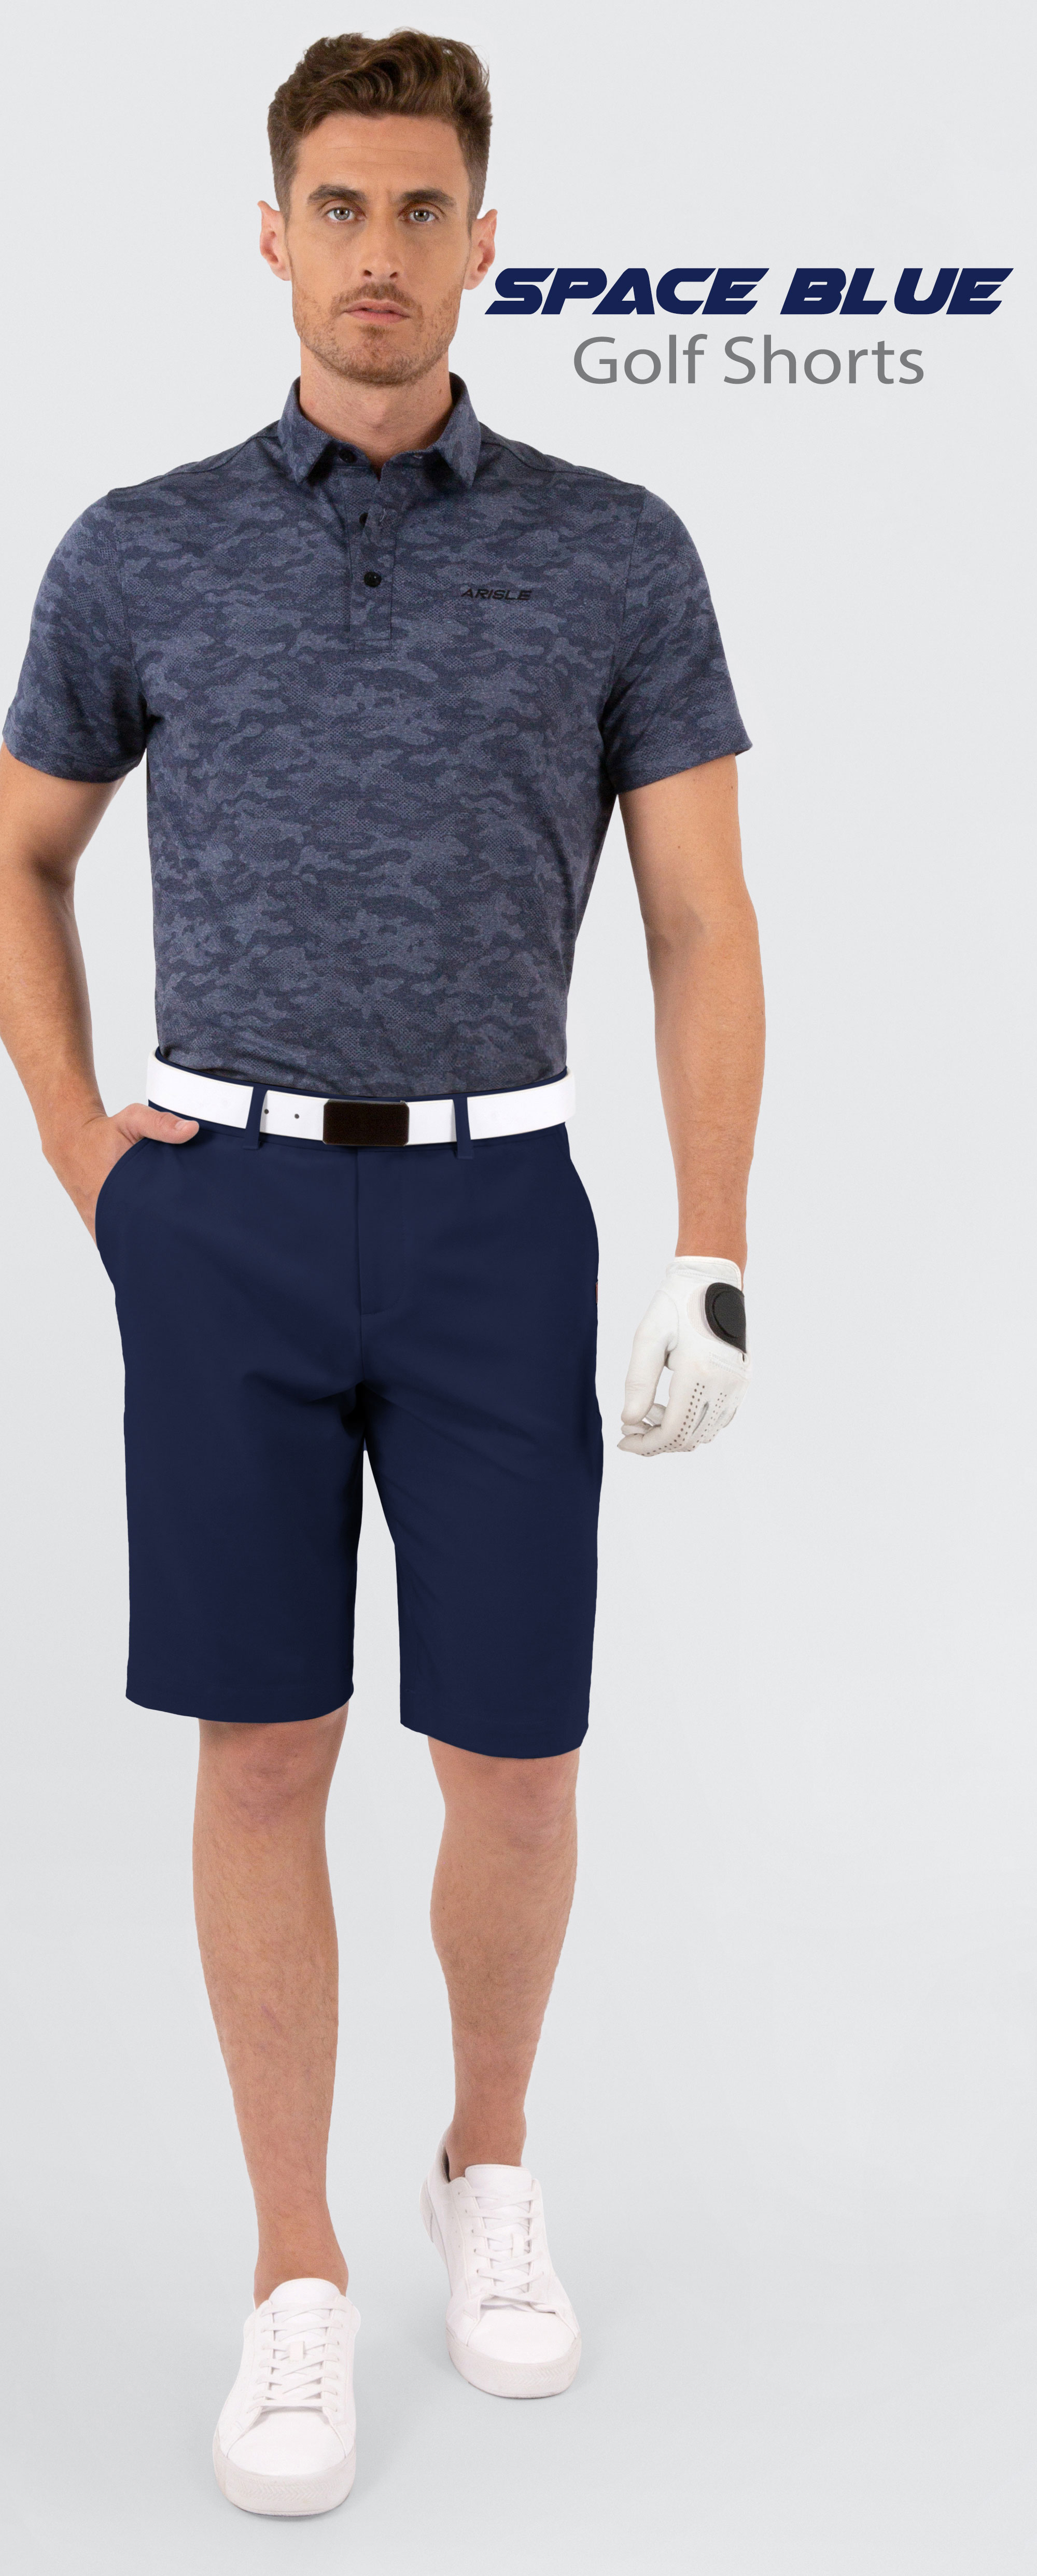 QuYn-shorts-golf-Arisle-Bossman-Space-Blue-info-1_1